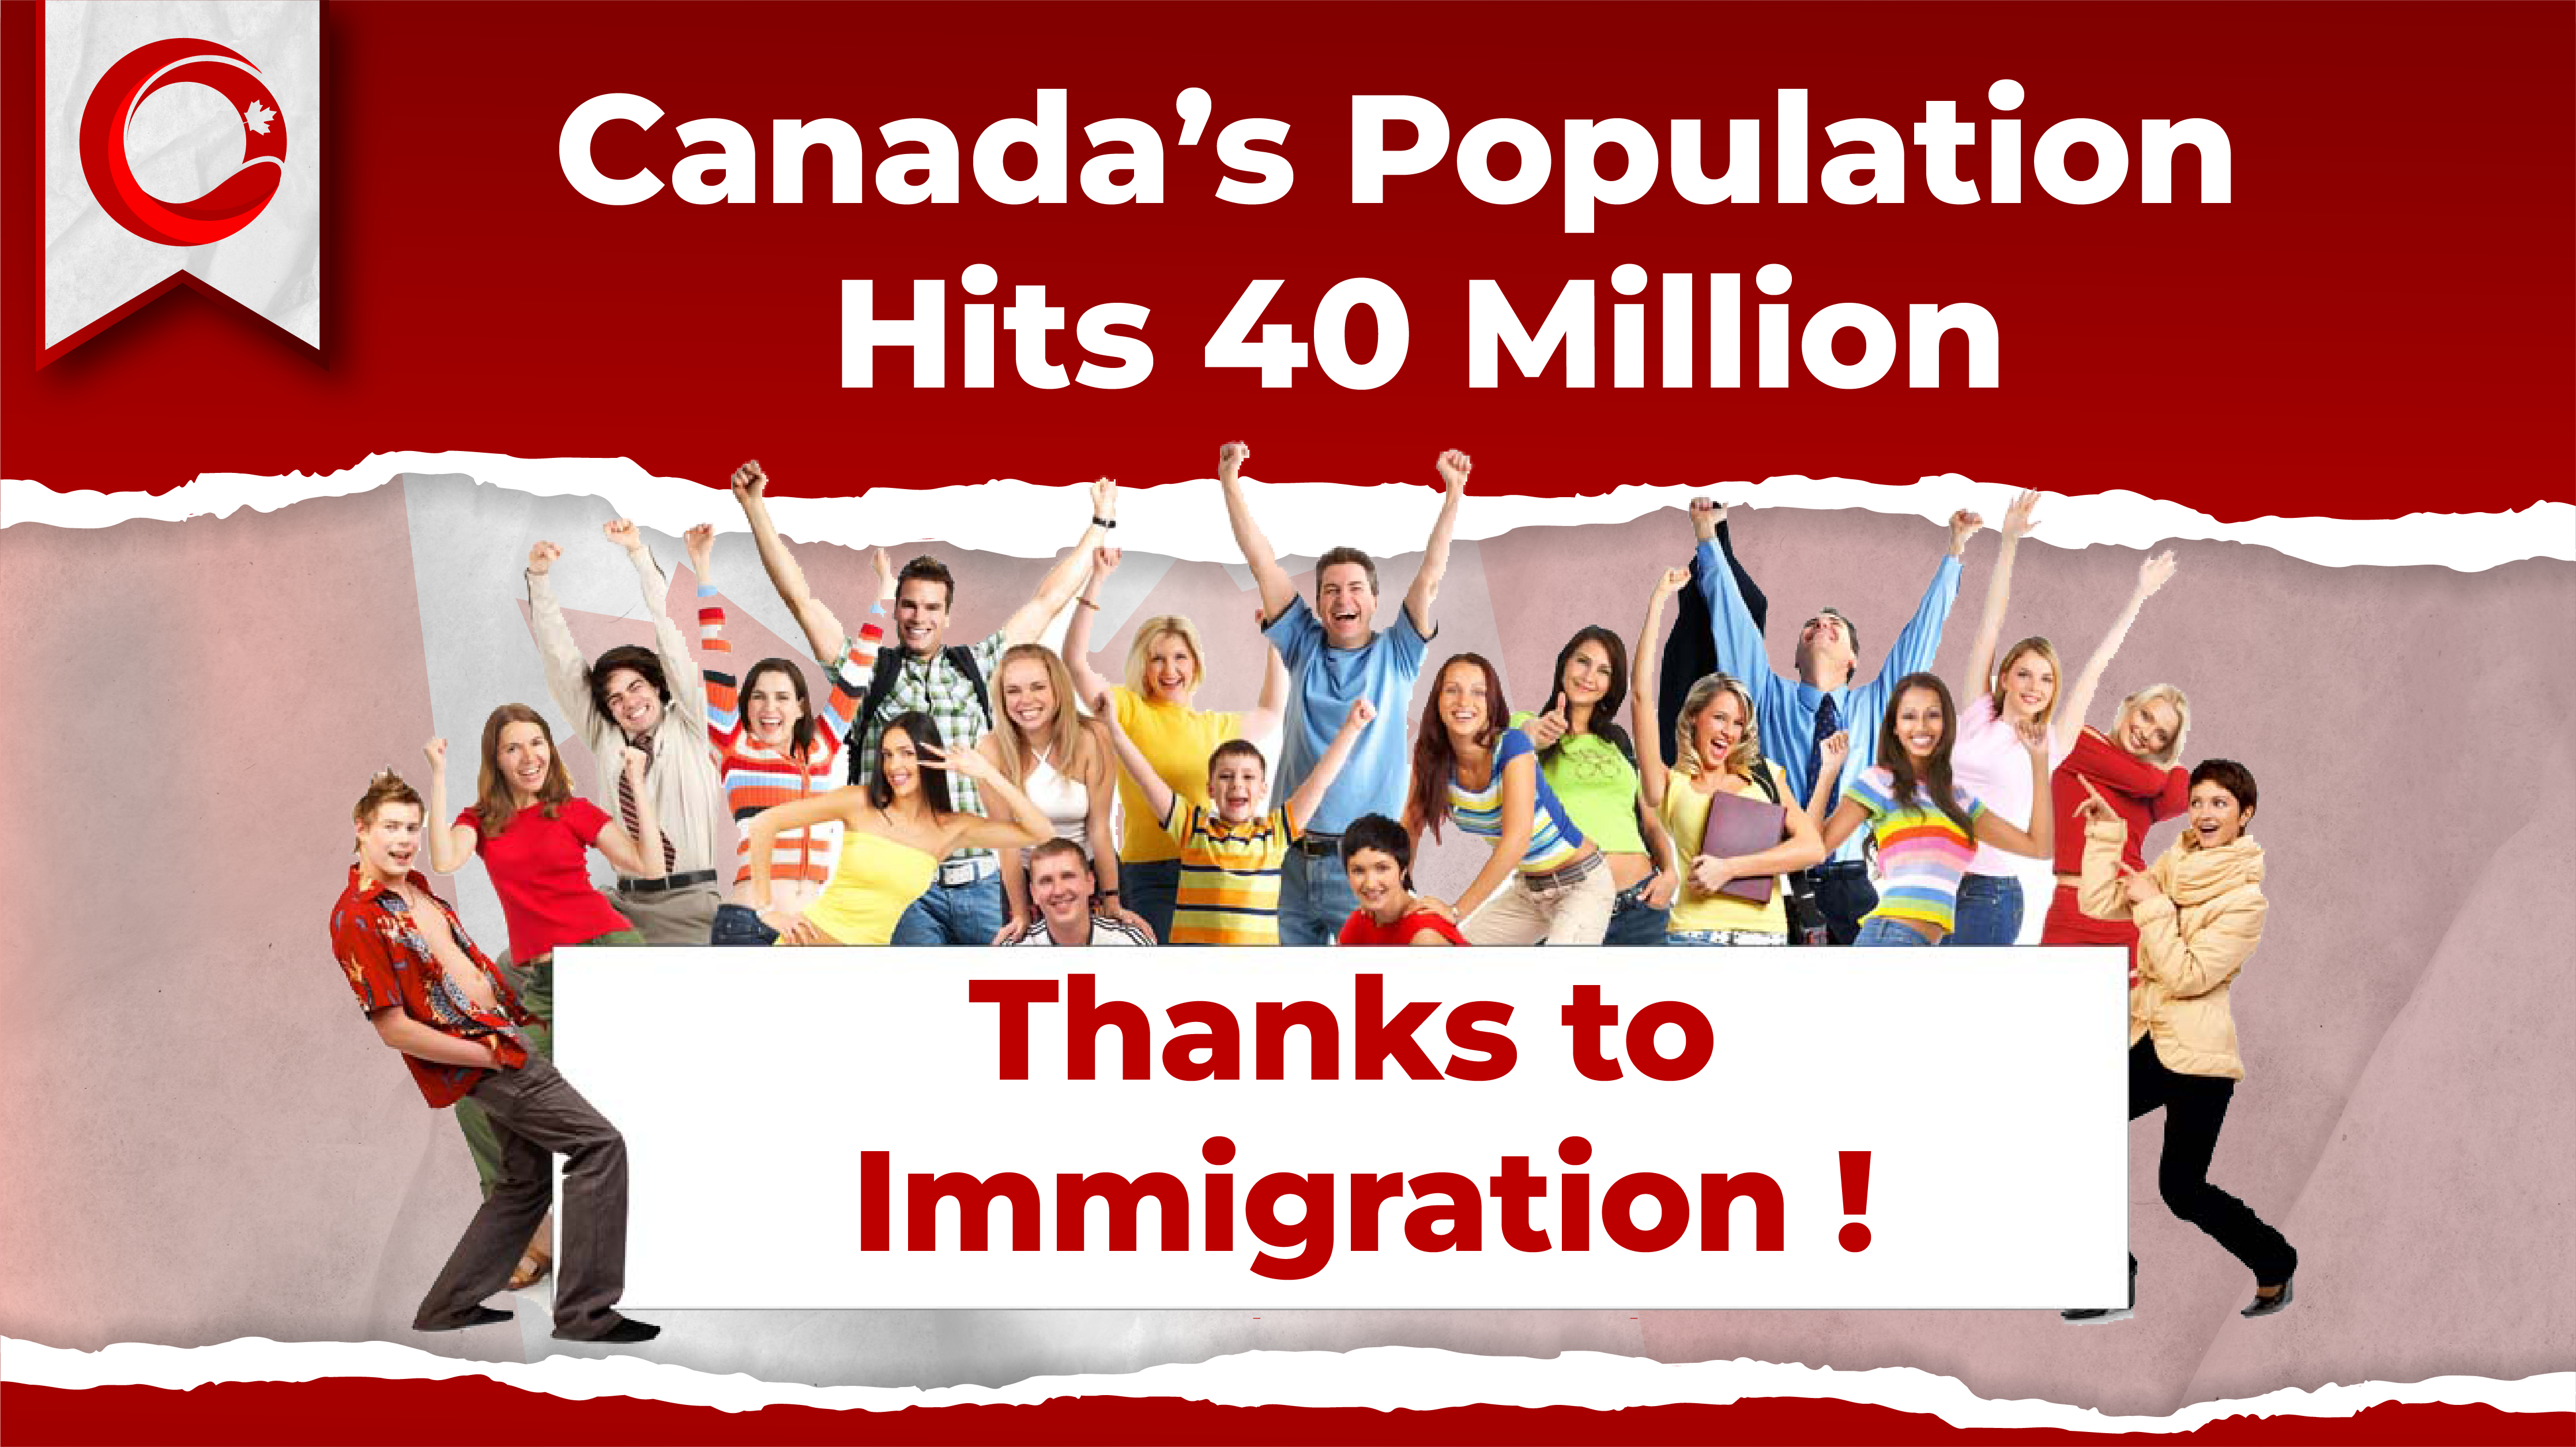 Canada's Population